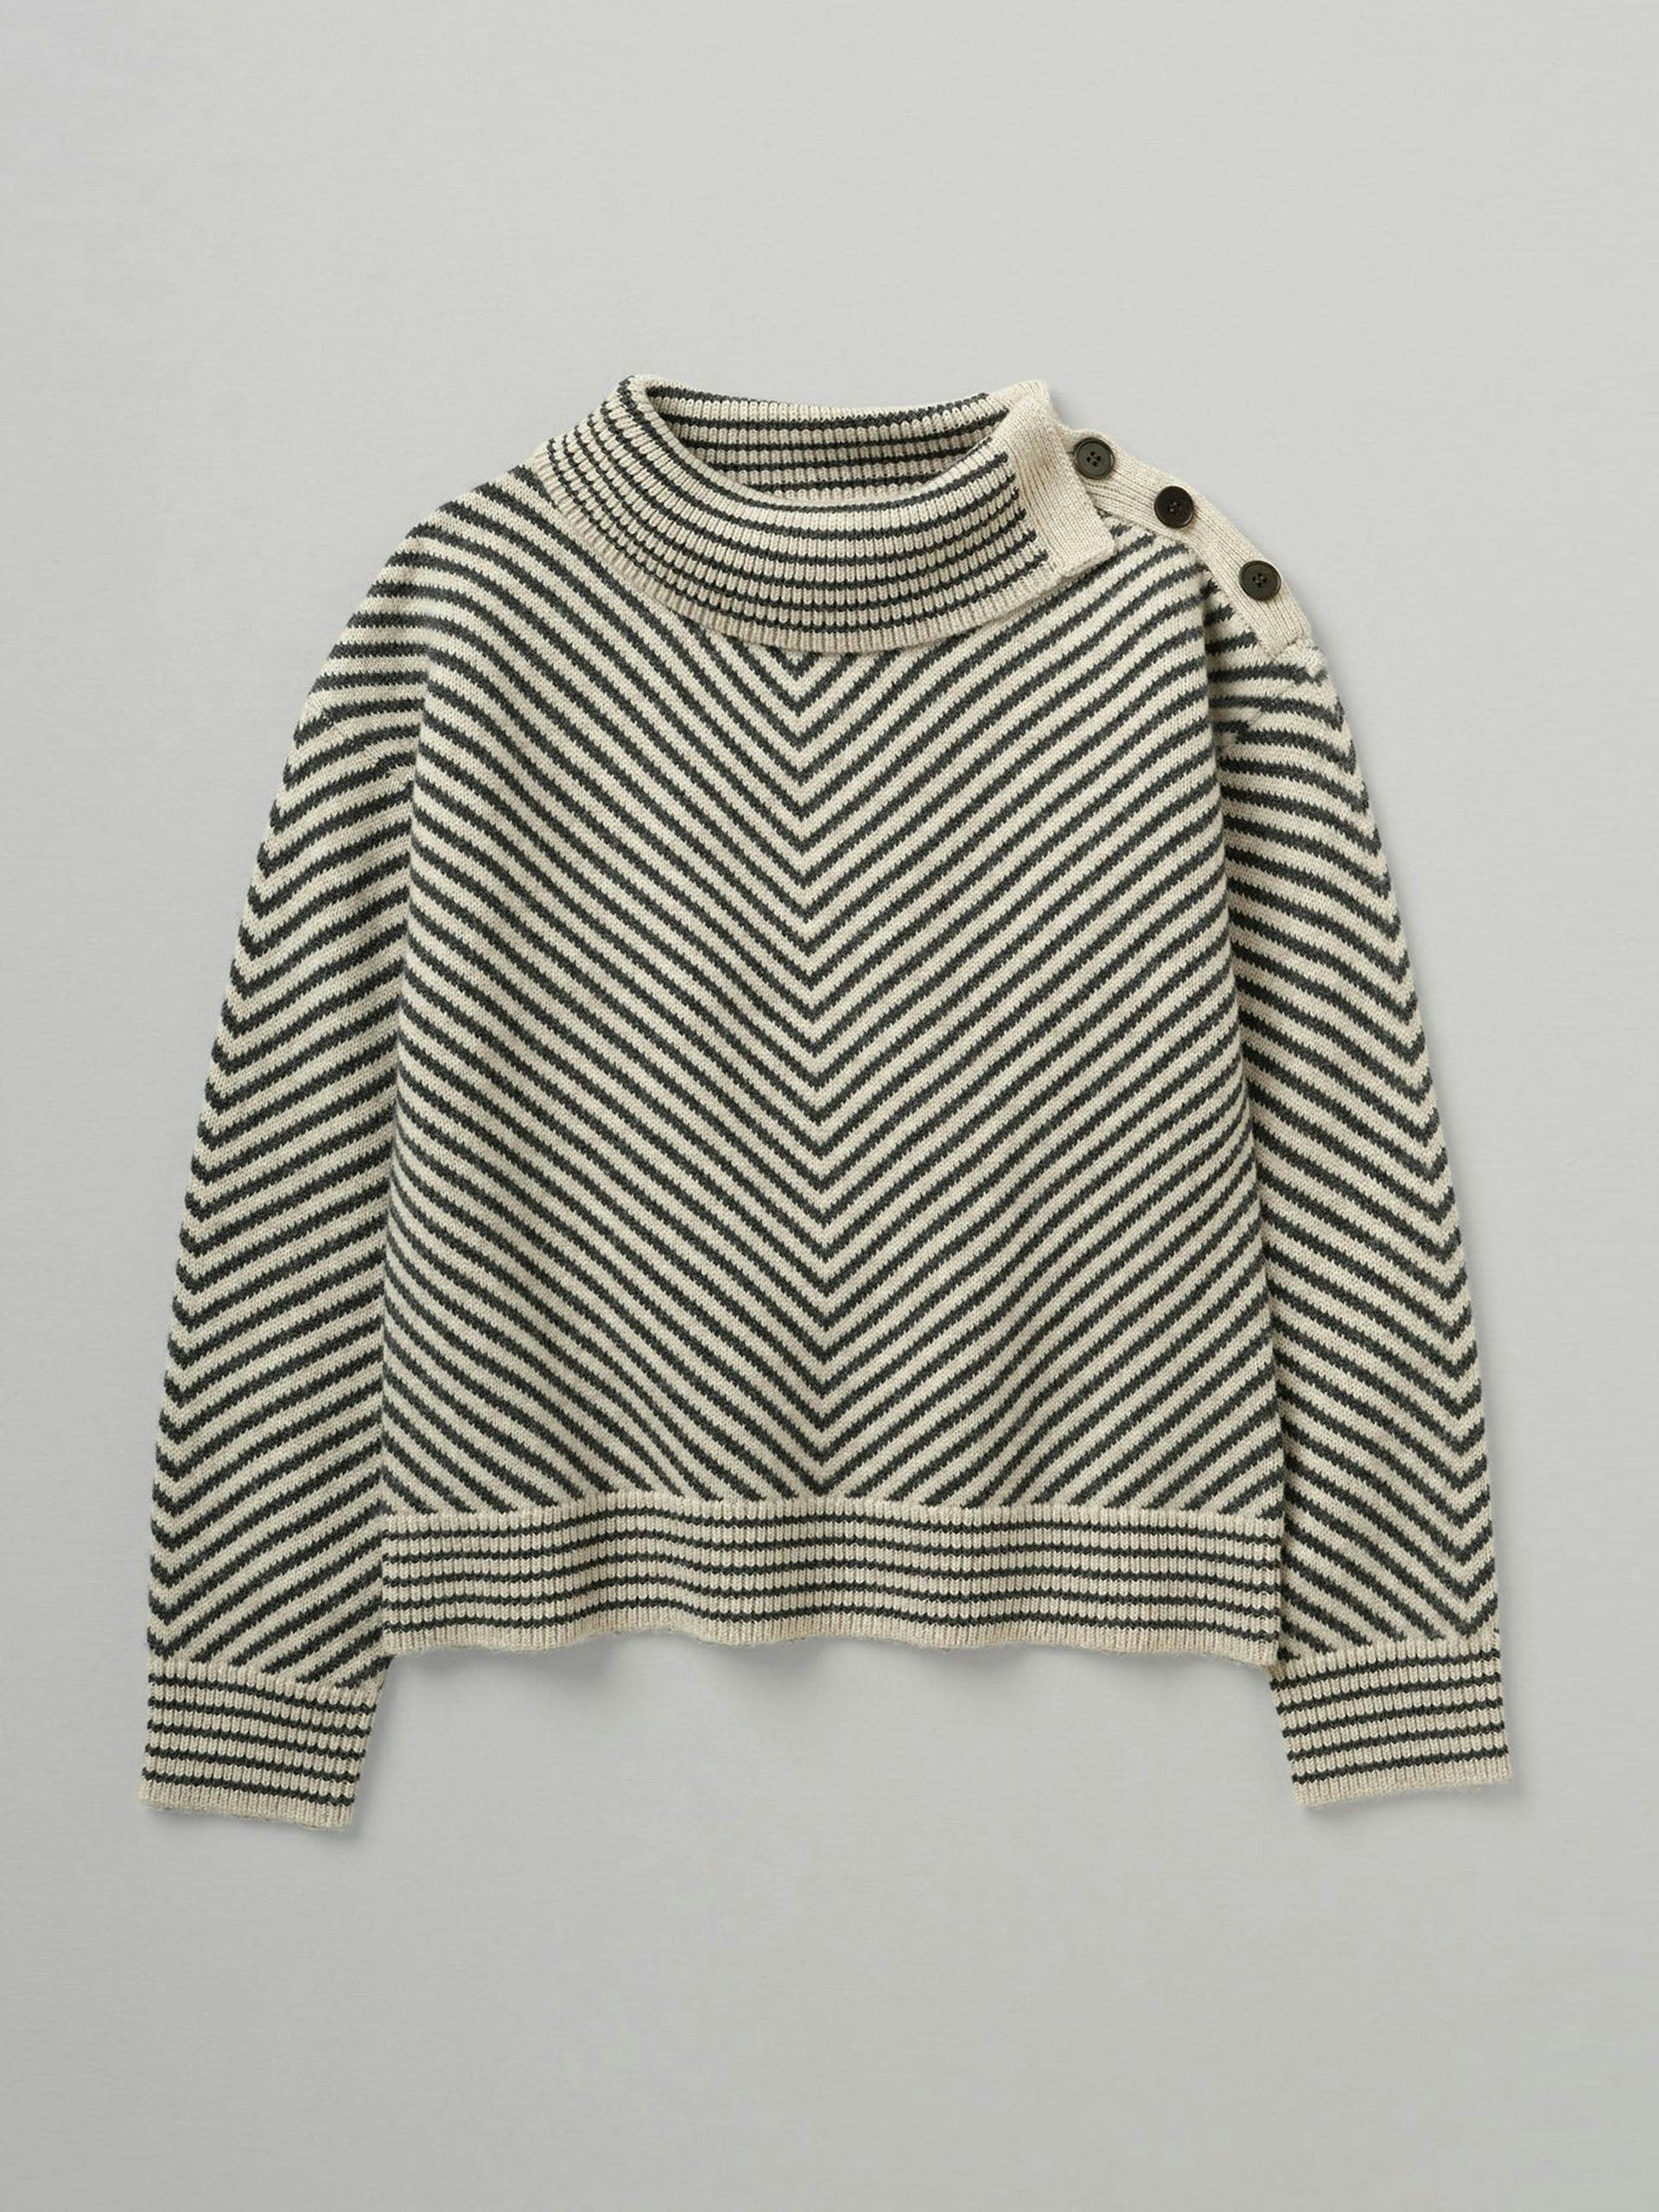 Black and white striped cashmere jumper